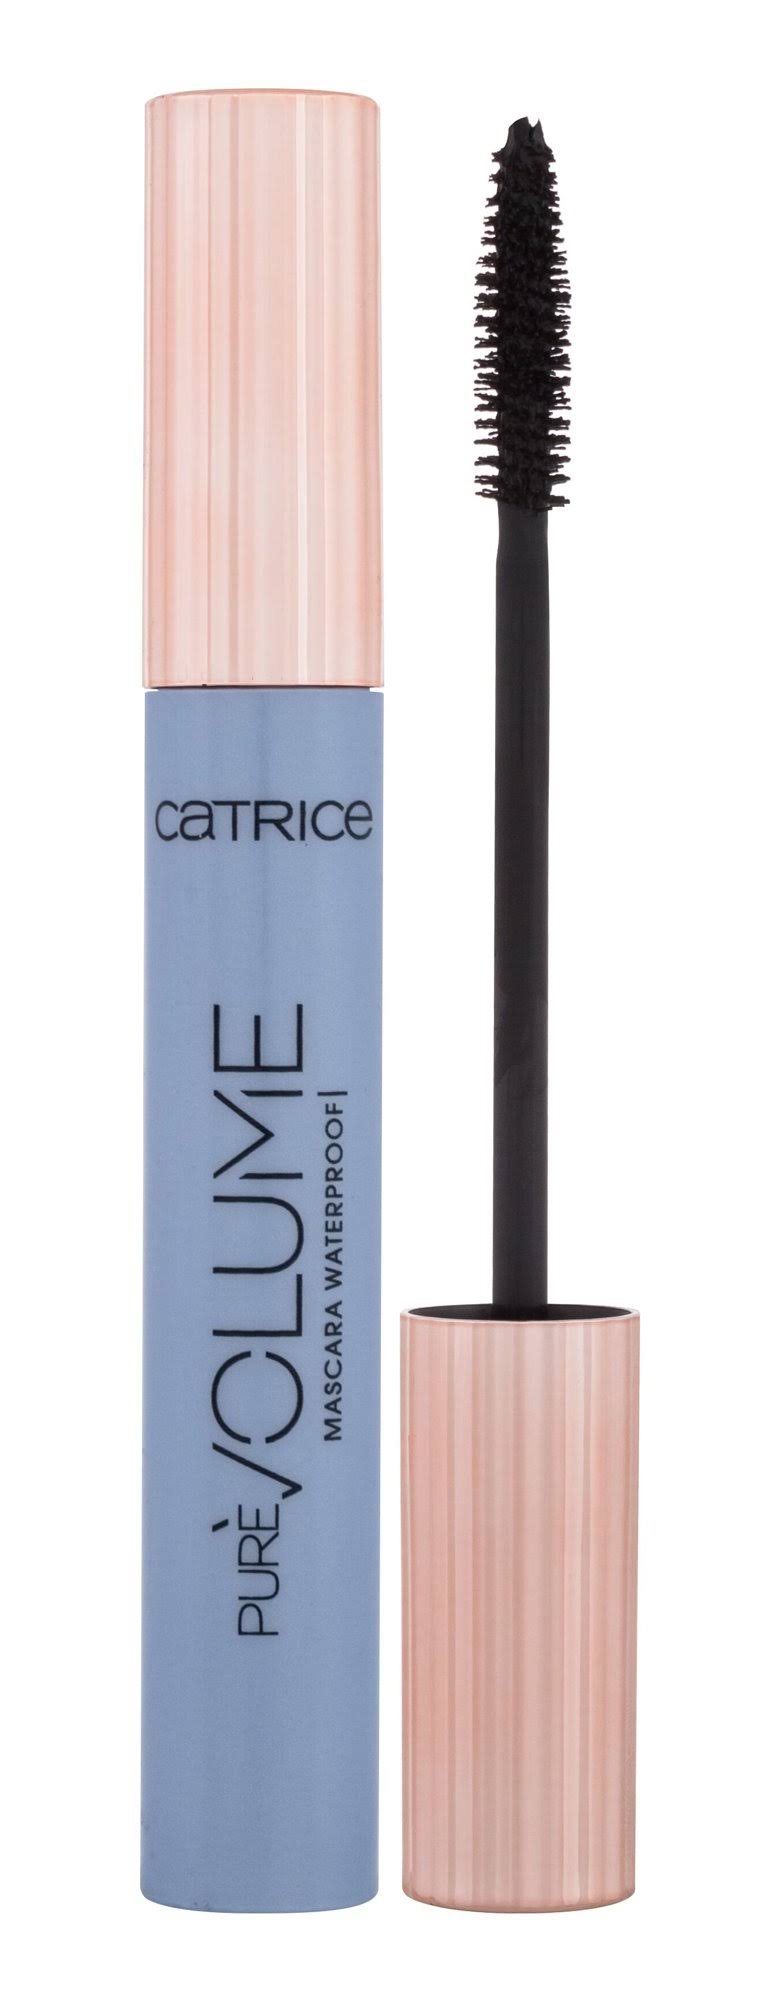 Catrice Cosmetics Pure Volume Mascara Waterproof Black 10ml